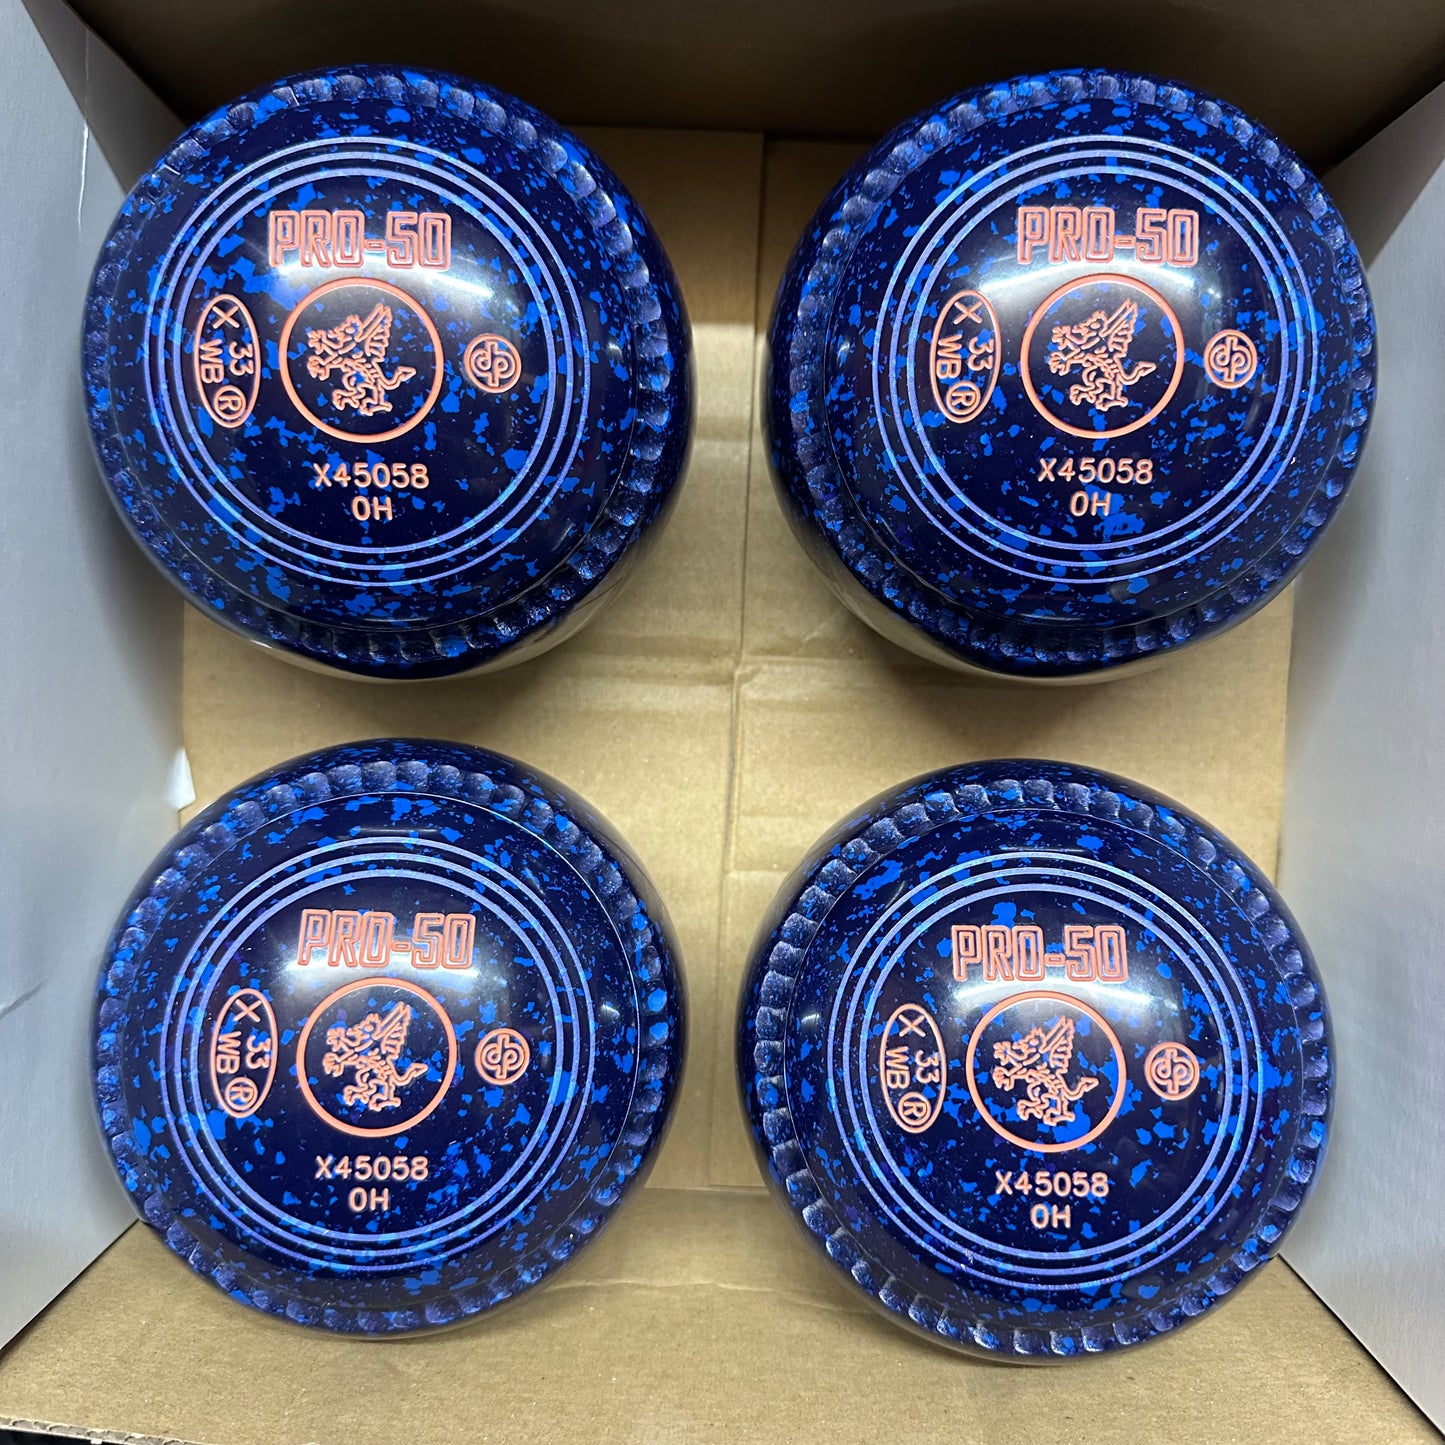 Drakes Pride PRO-50 - Size 0H - Dark Blue/Blue (Red Rings) - WB33 Stamp